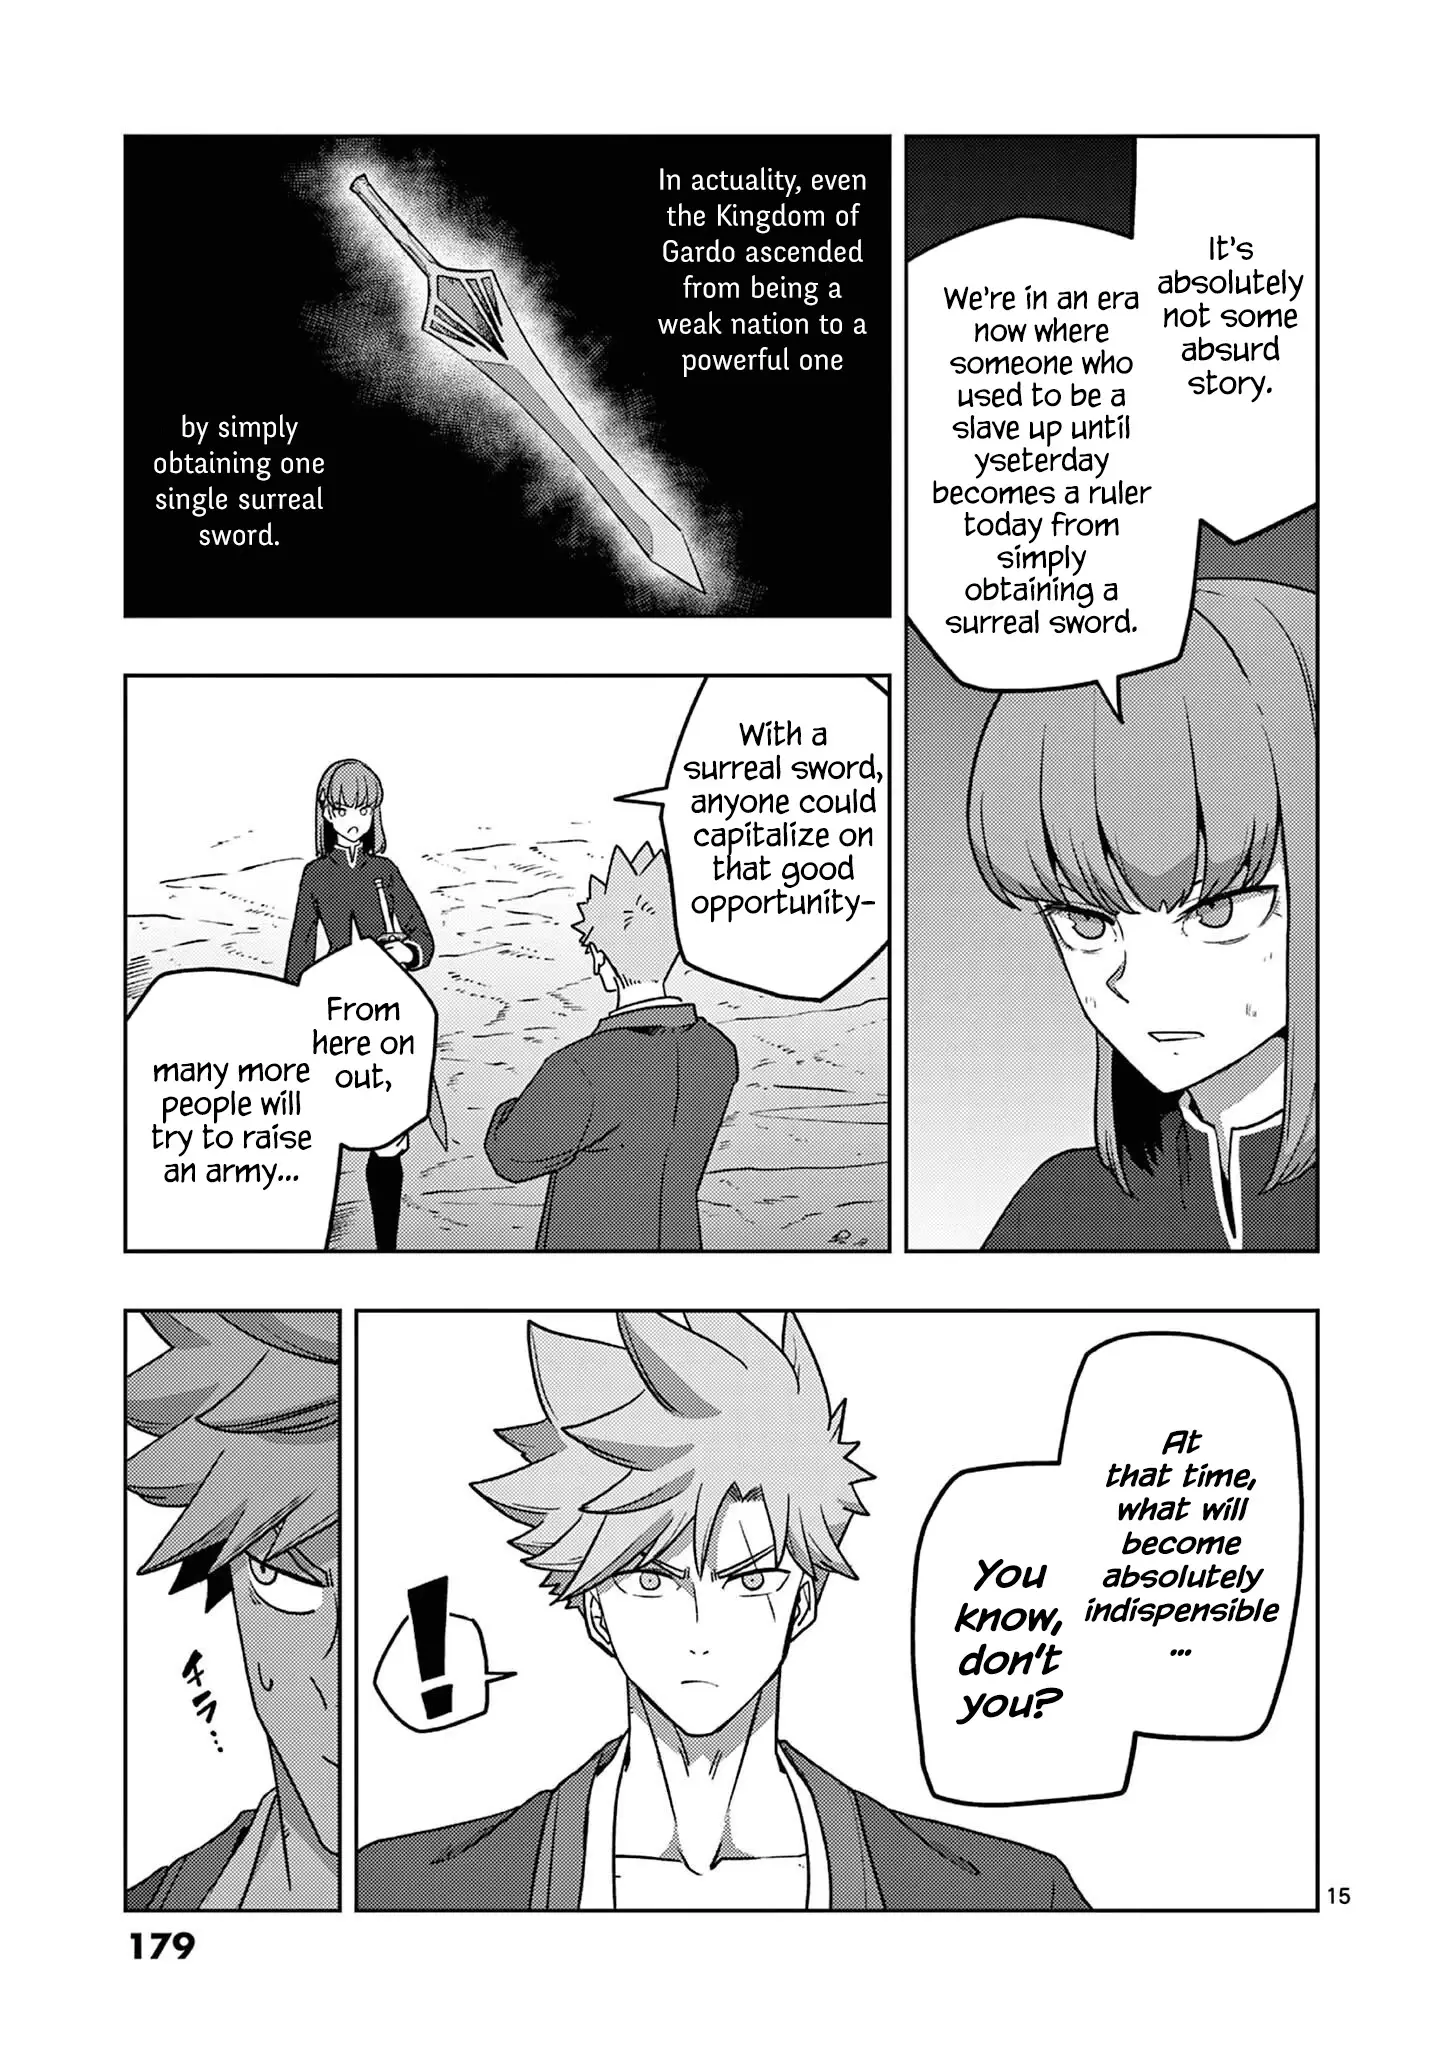 Verndio - Surreal Sword Saga - 11 page 18